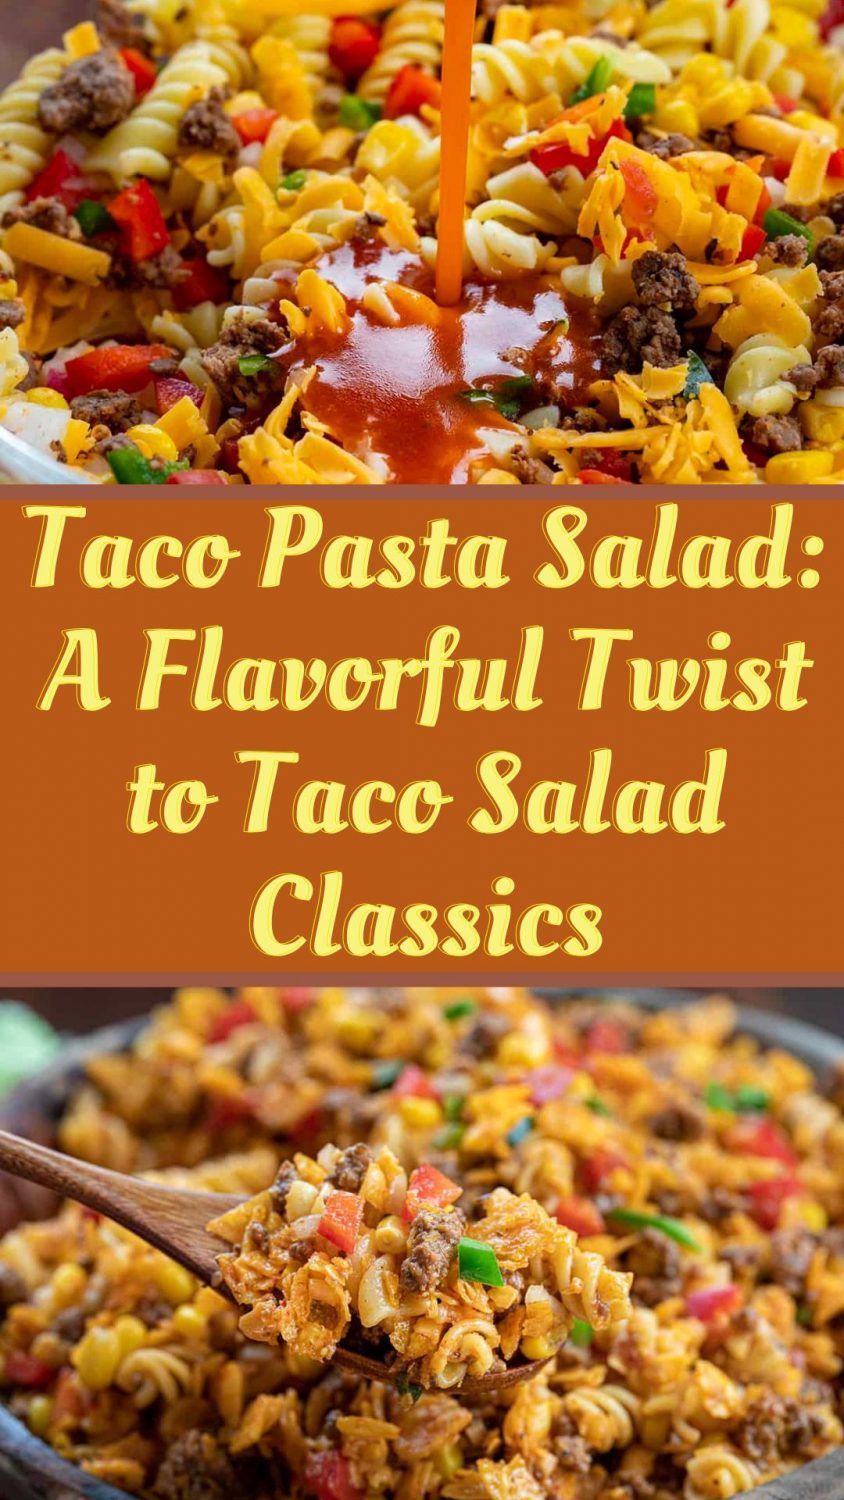 Taco Pasta Salad: A Flavorful Twist to Taco Salad Classics